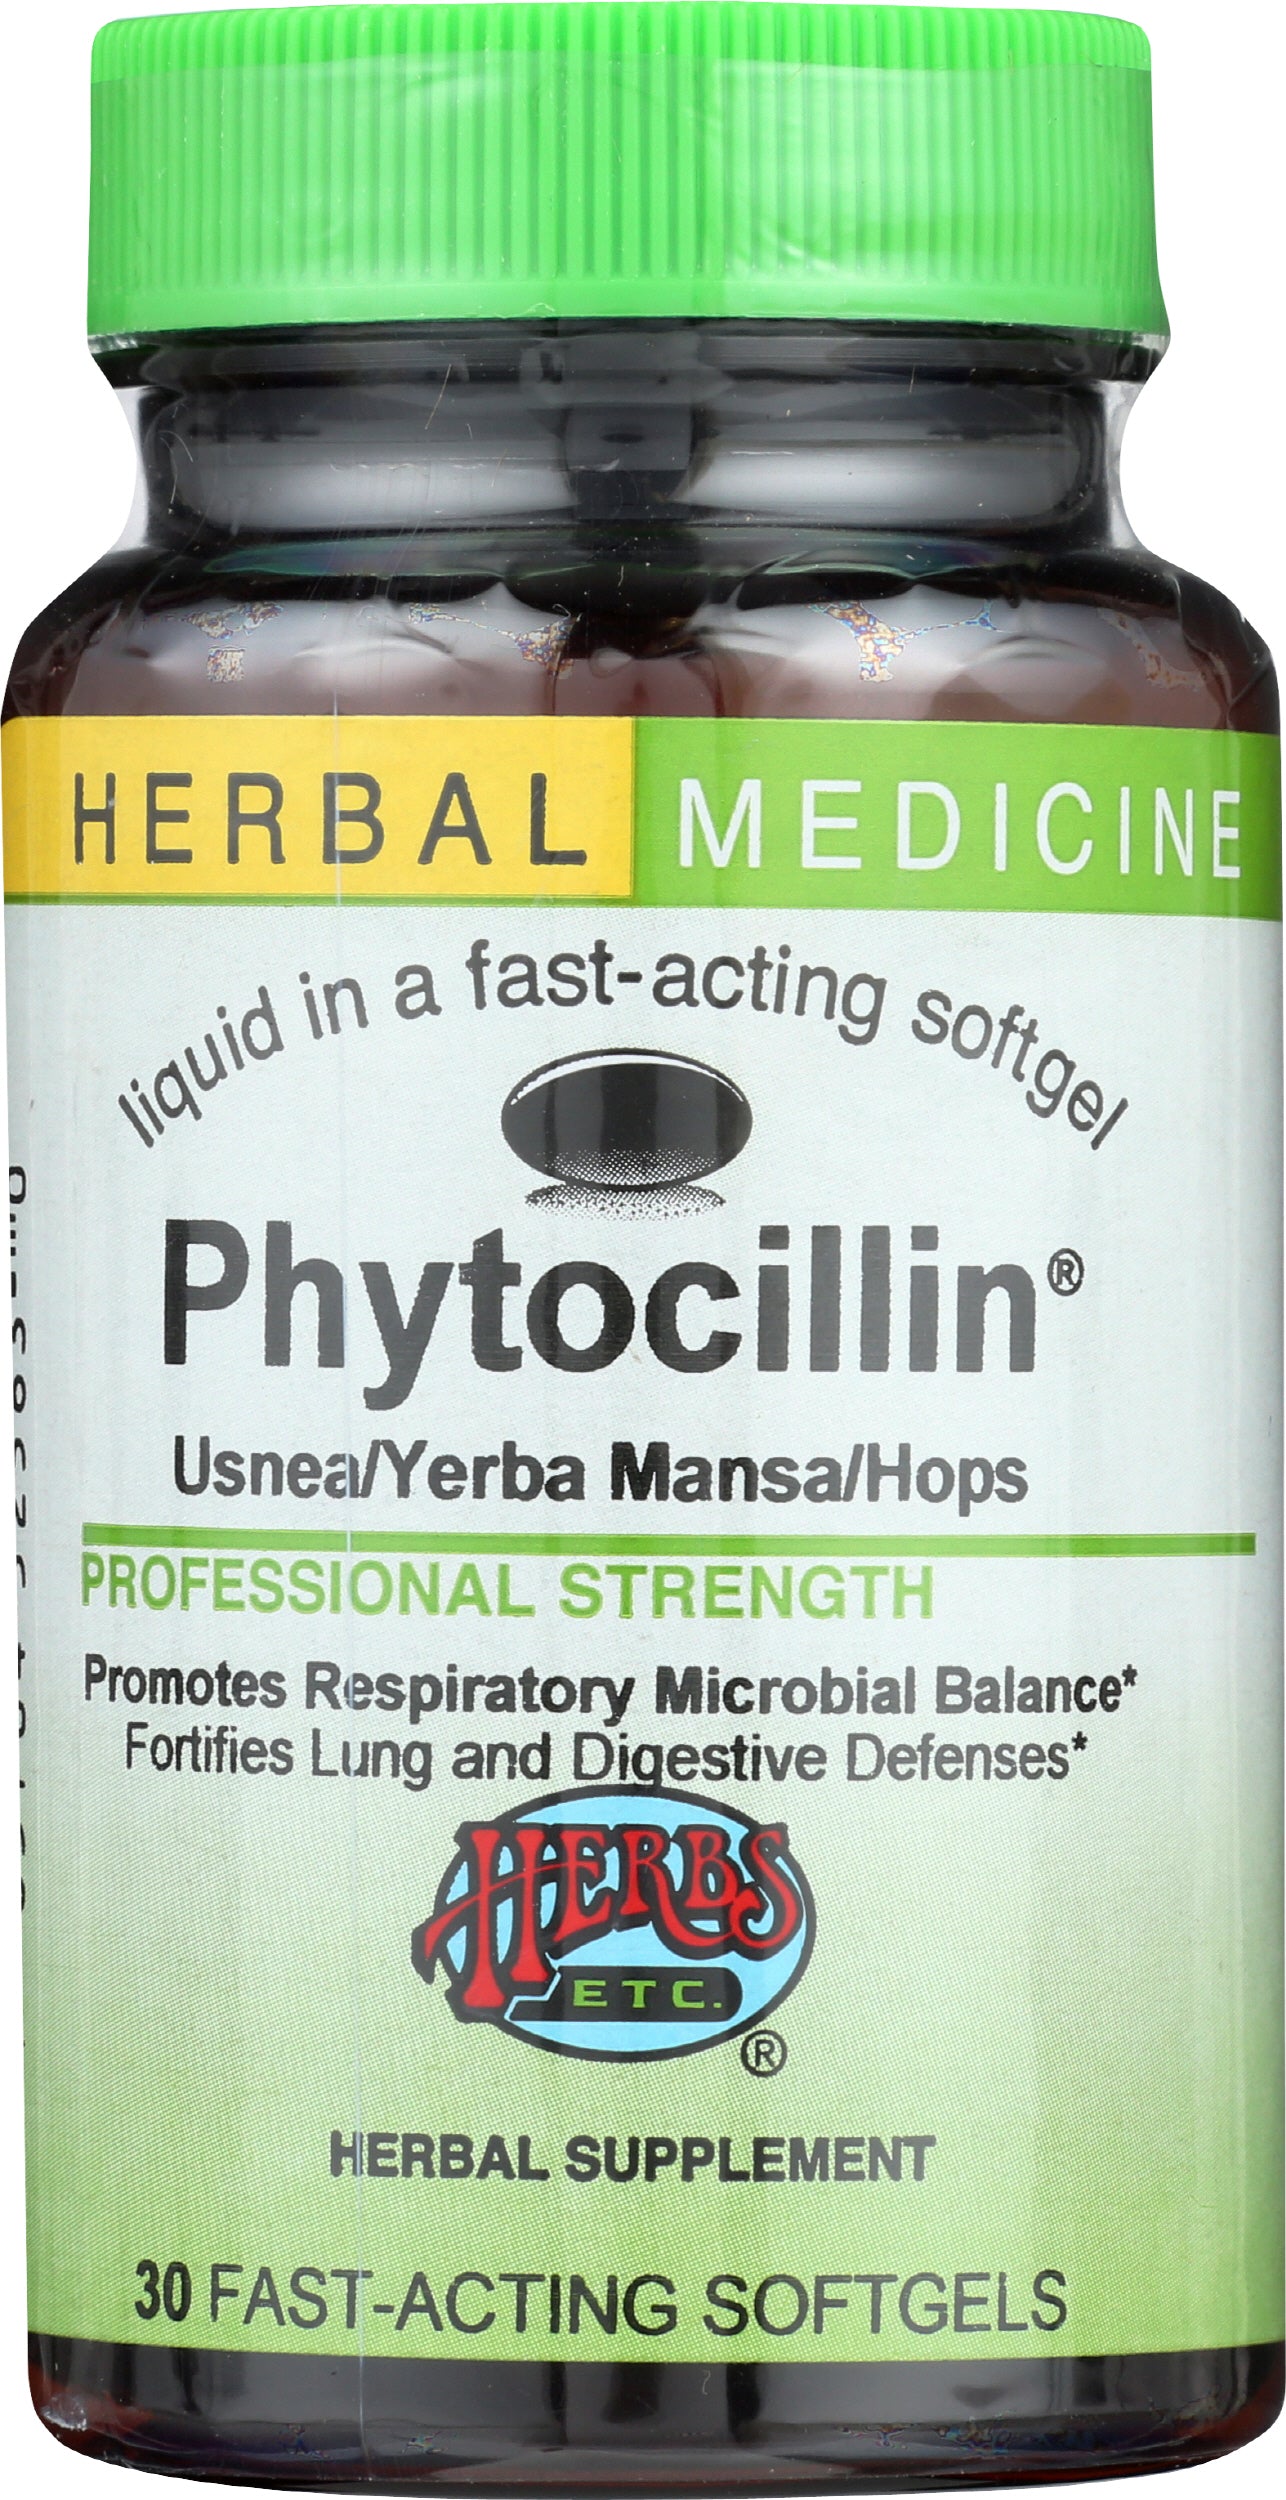 Herbs Etc. Phytocillin 30 Softgels Front of Bottle